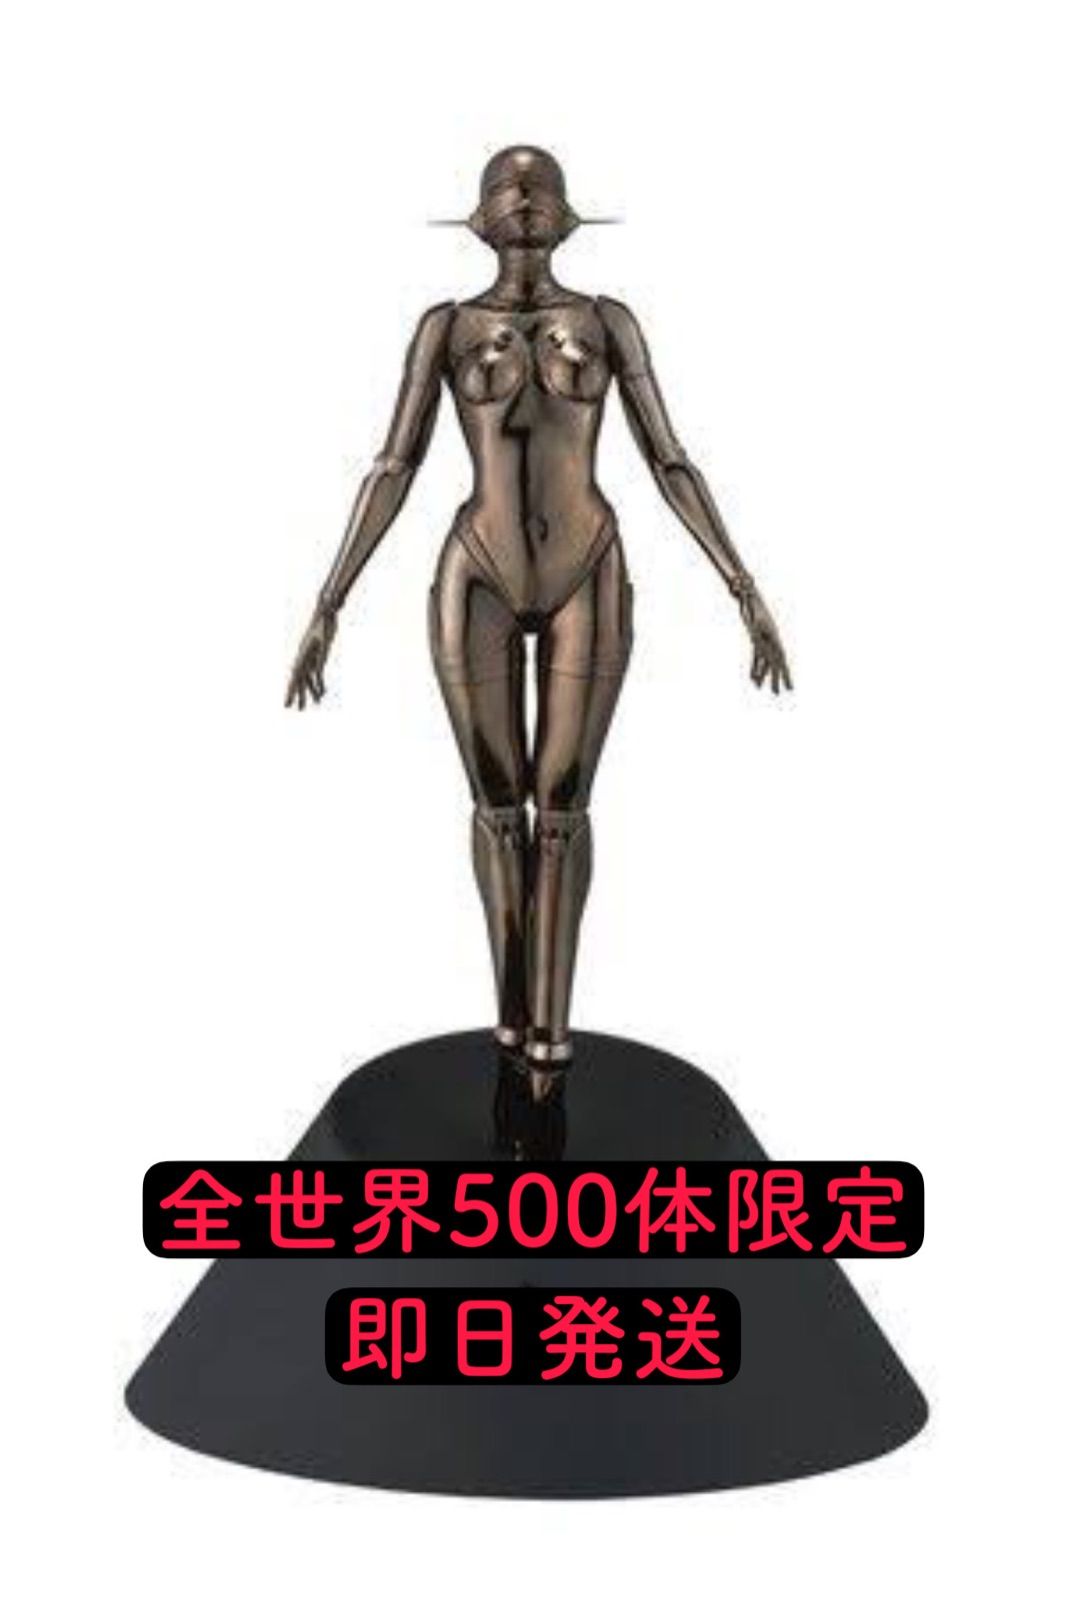 空山基 『Sexy Robot floating』1/4 scale black